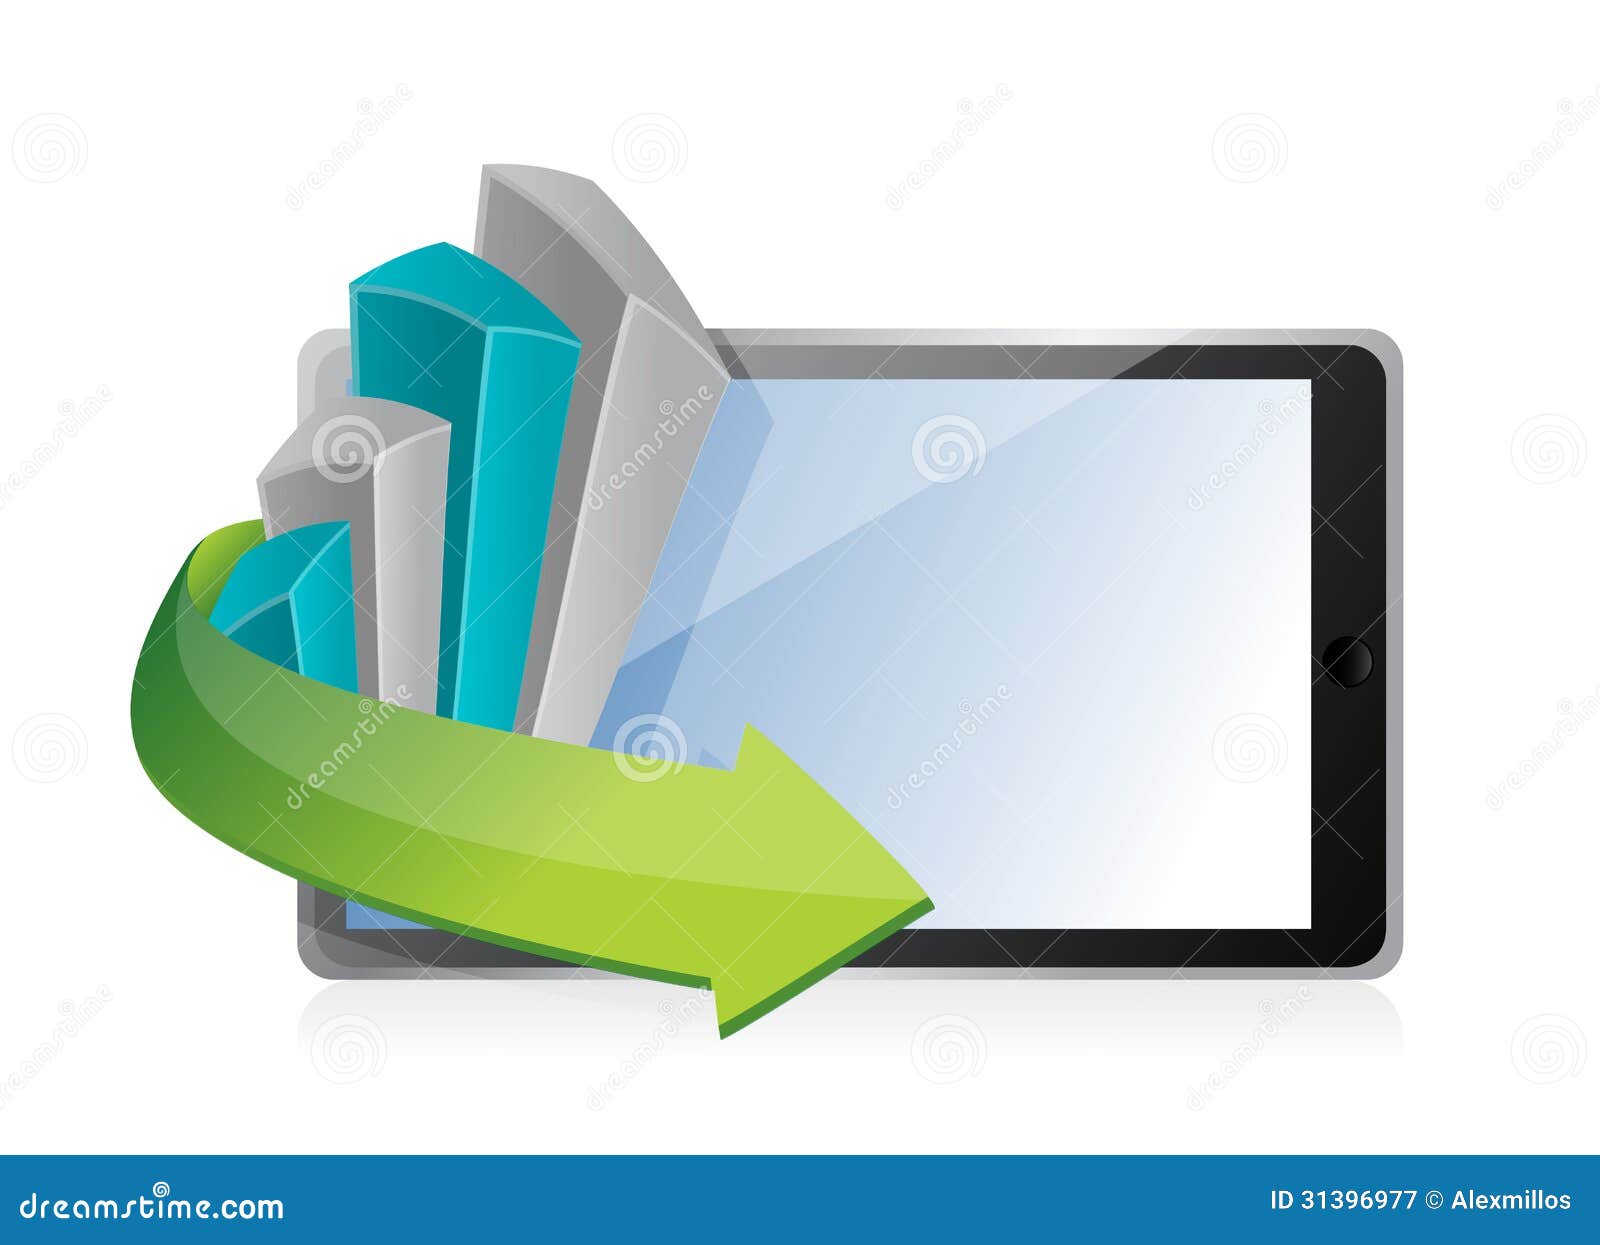 Business graph tablet illustration design over a white background